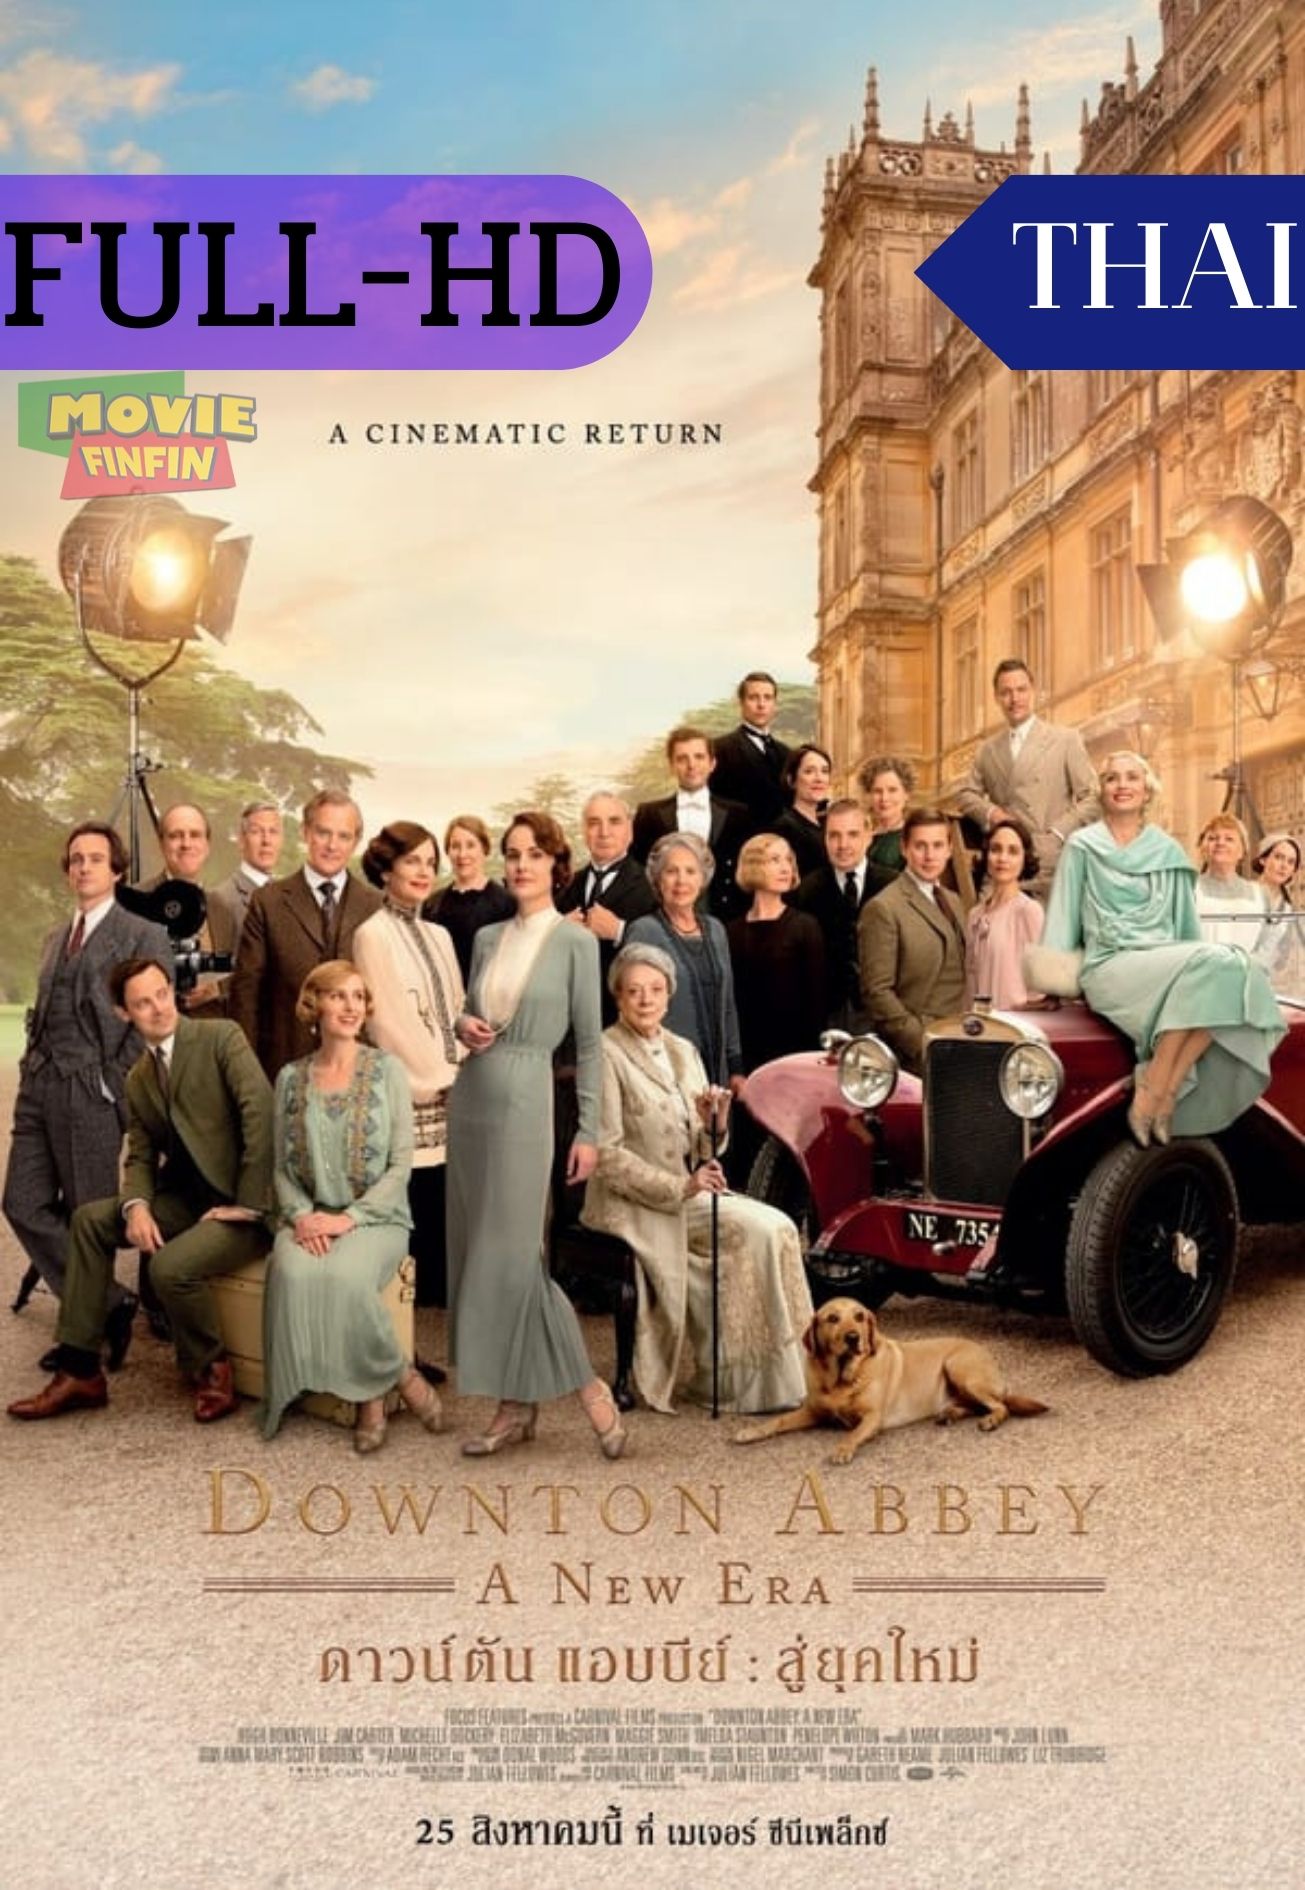 Downton Abbey A New Era (2022) ดาวน์ตัน แอบบีย์ สู่ยุคใหม่ 